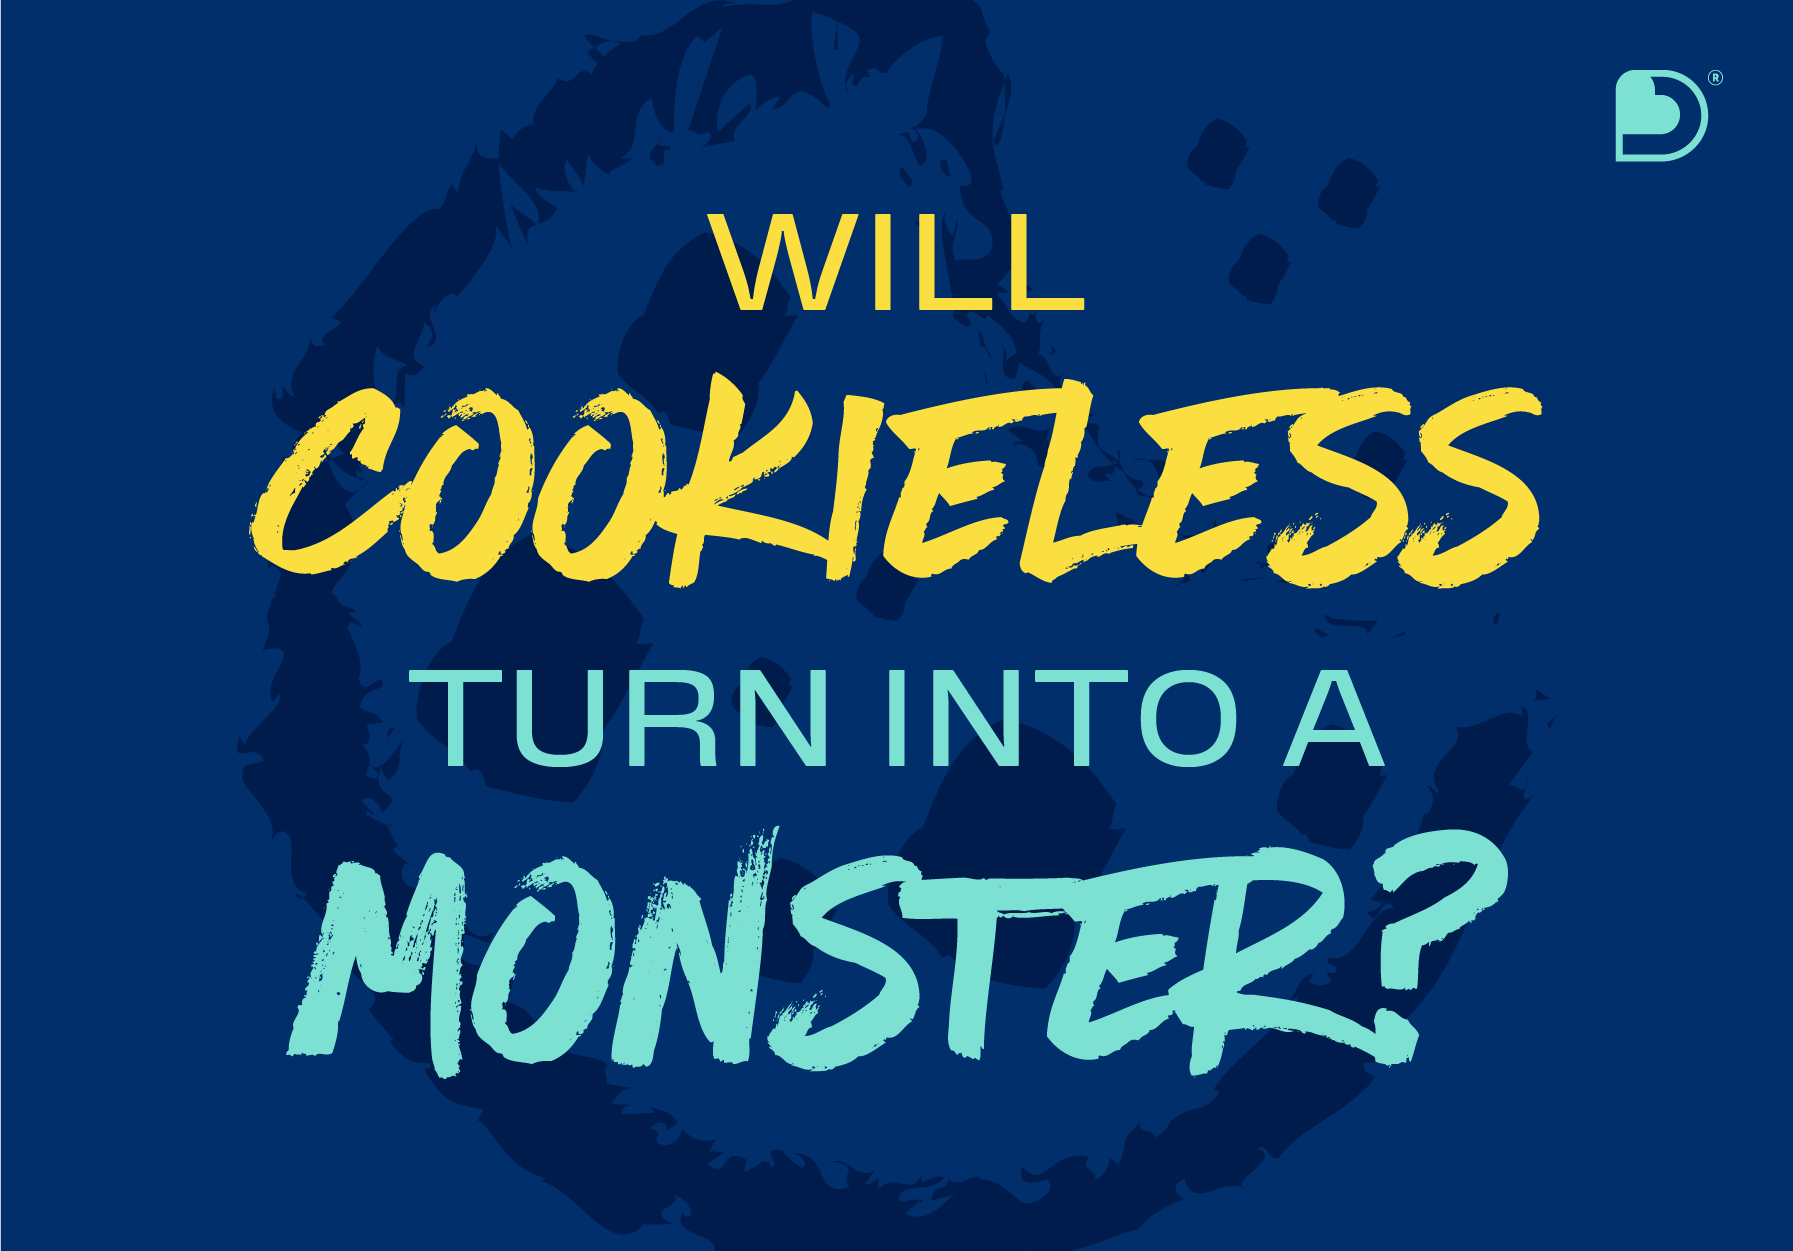 cookieless marketing